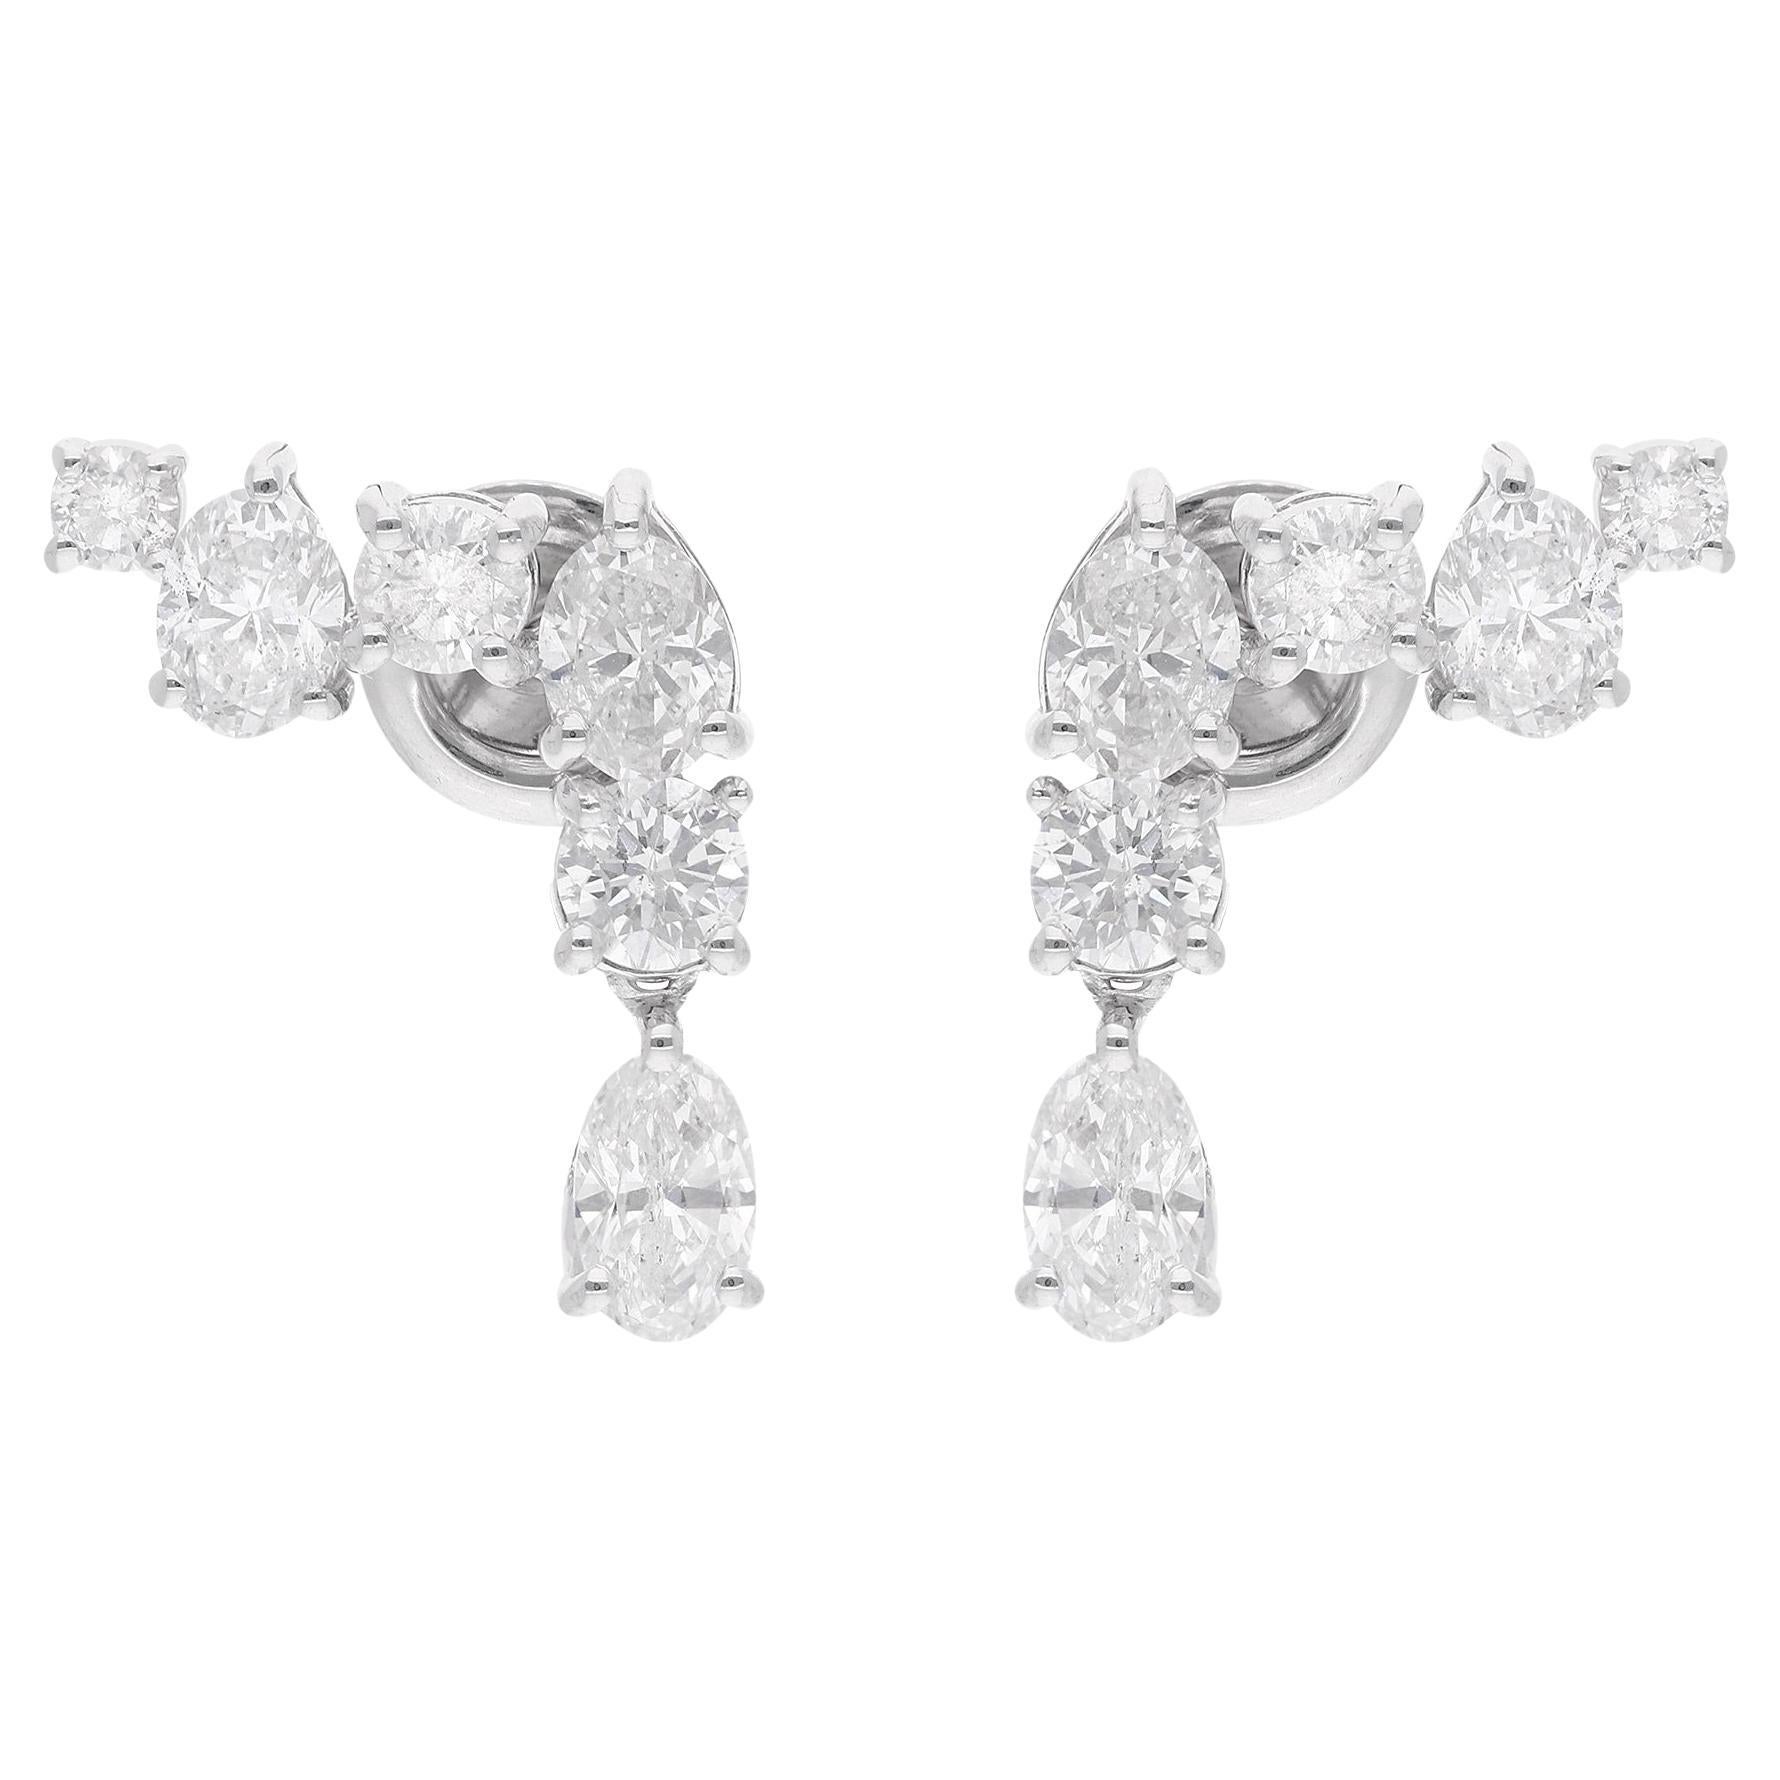 2.83 Carat Oval & Round Diamond Earrings 14 Karat White Gold Handmade Jewelry